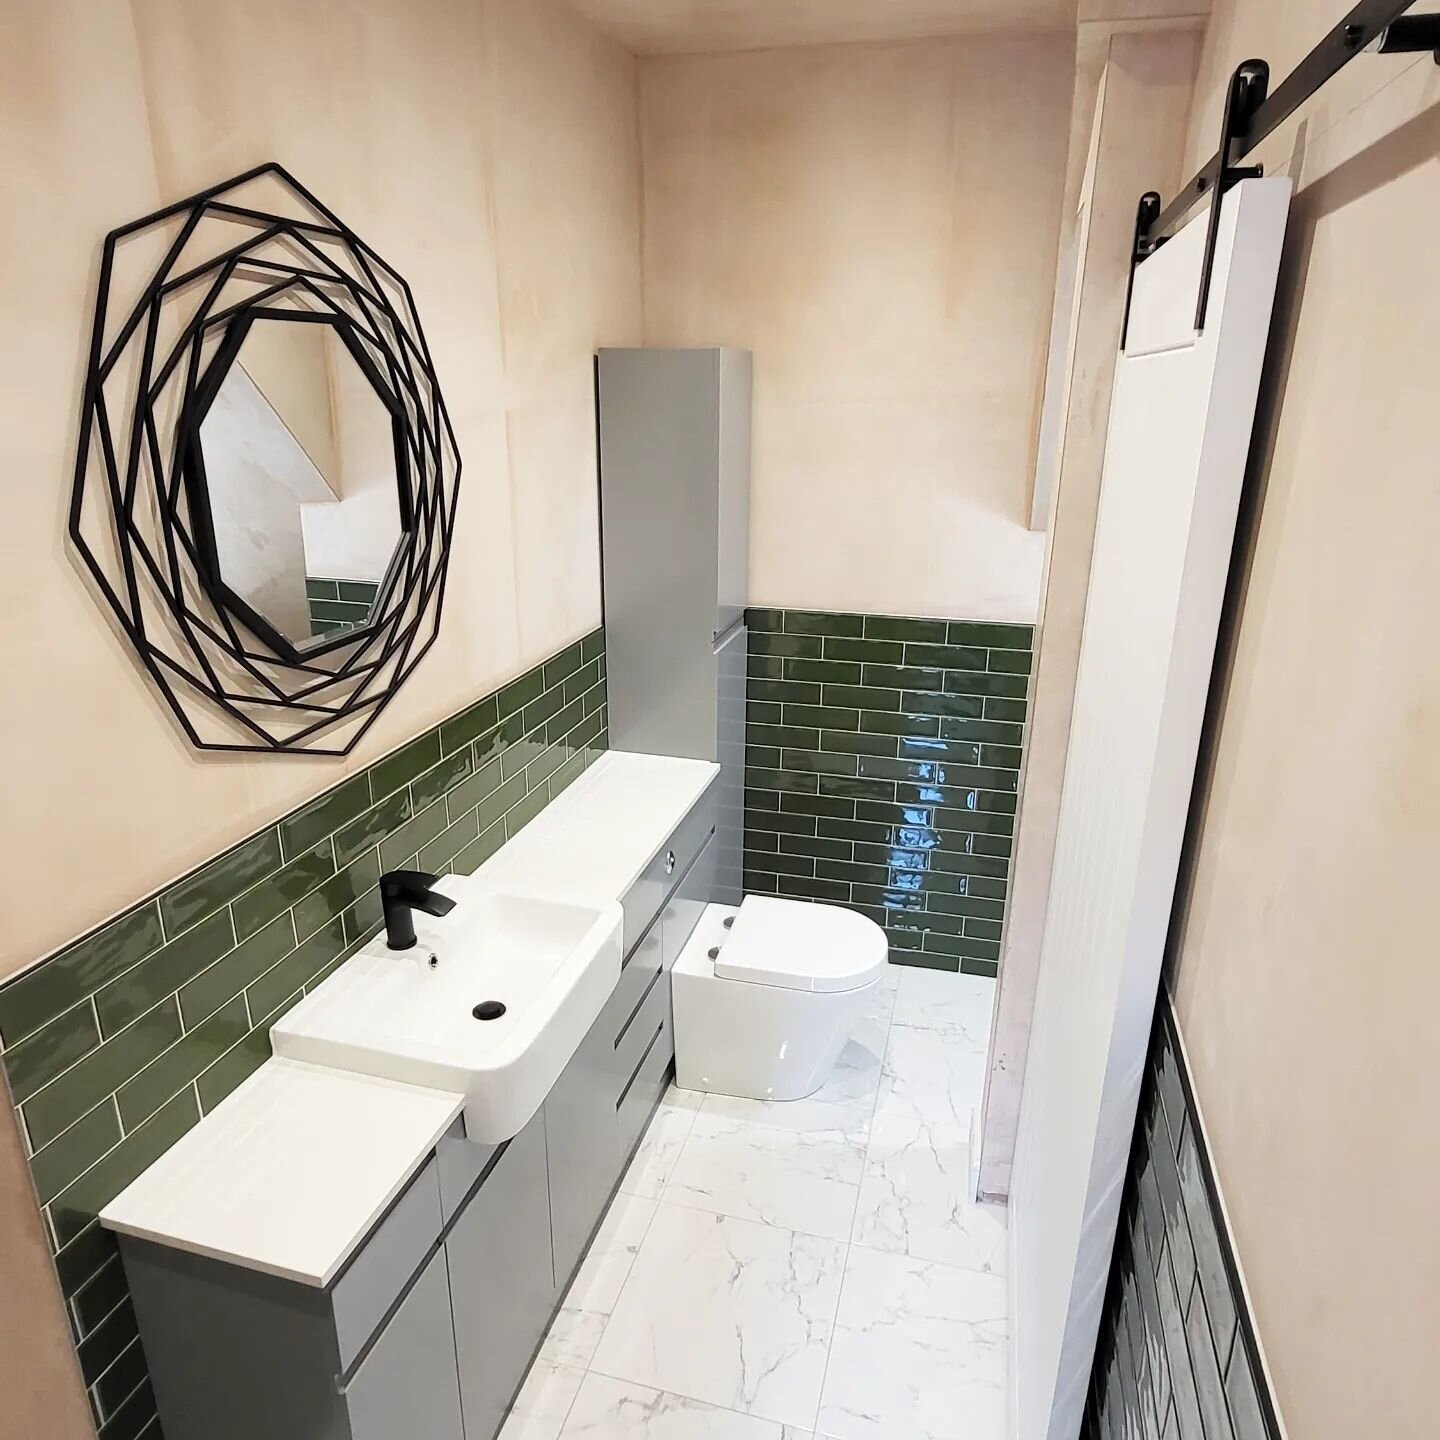 Another Green, Green's Bathrooms installation. 
#sheffield #bathroomrenovation